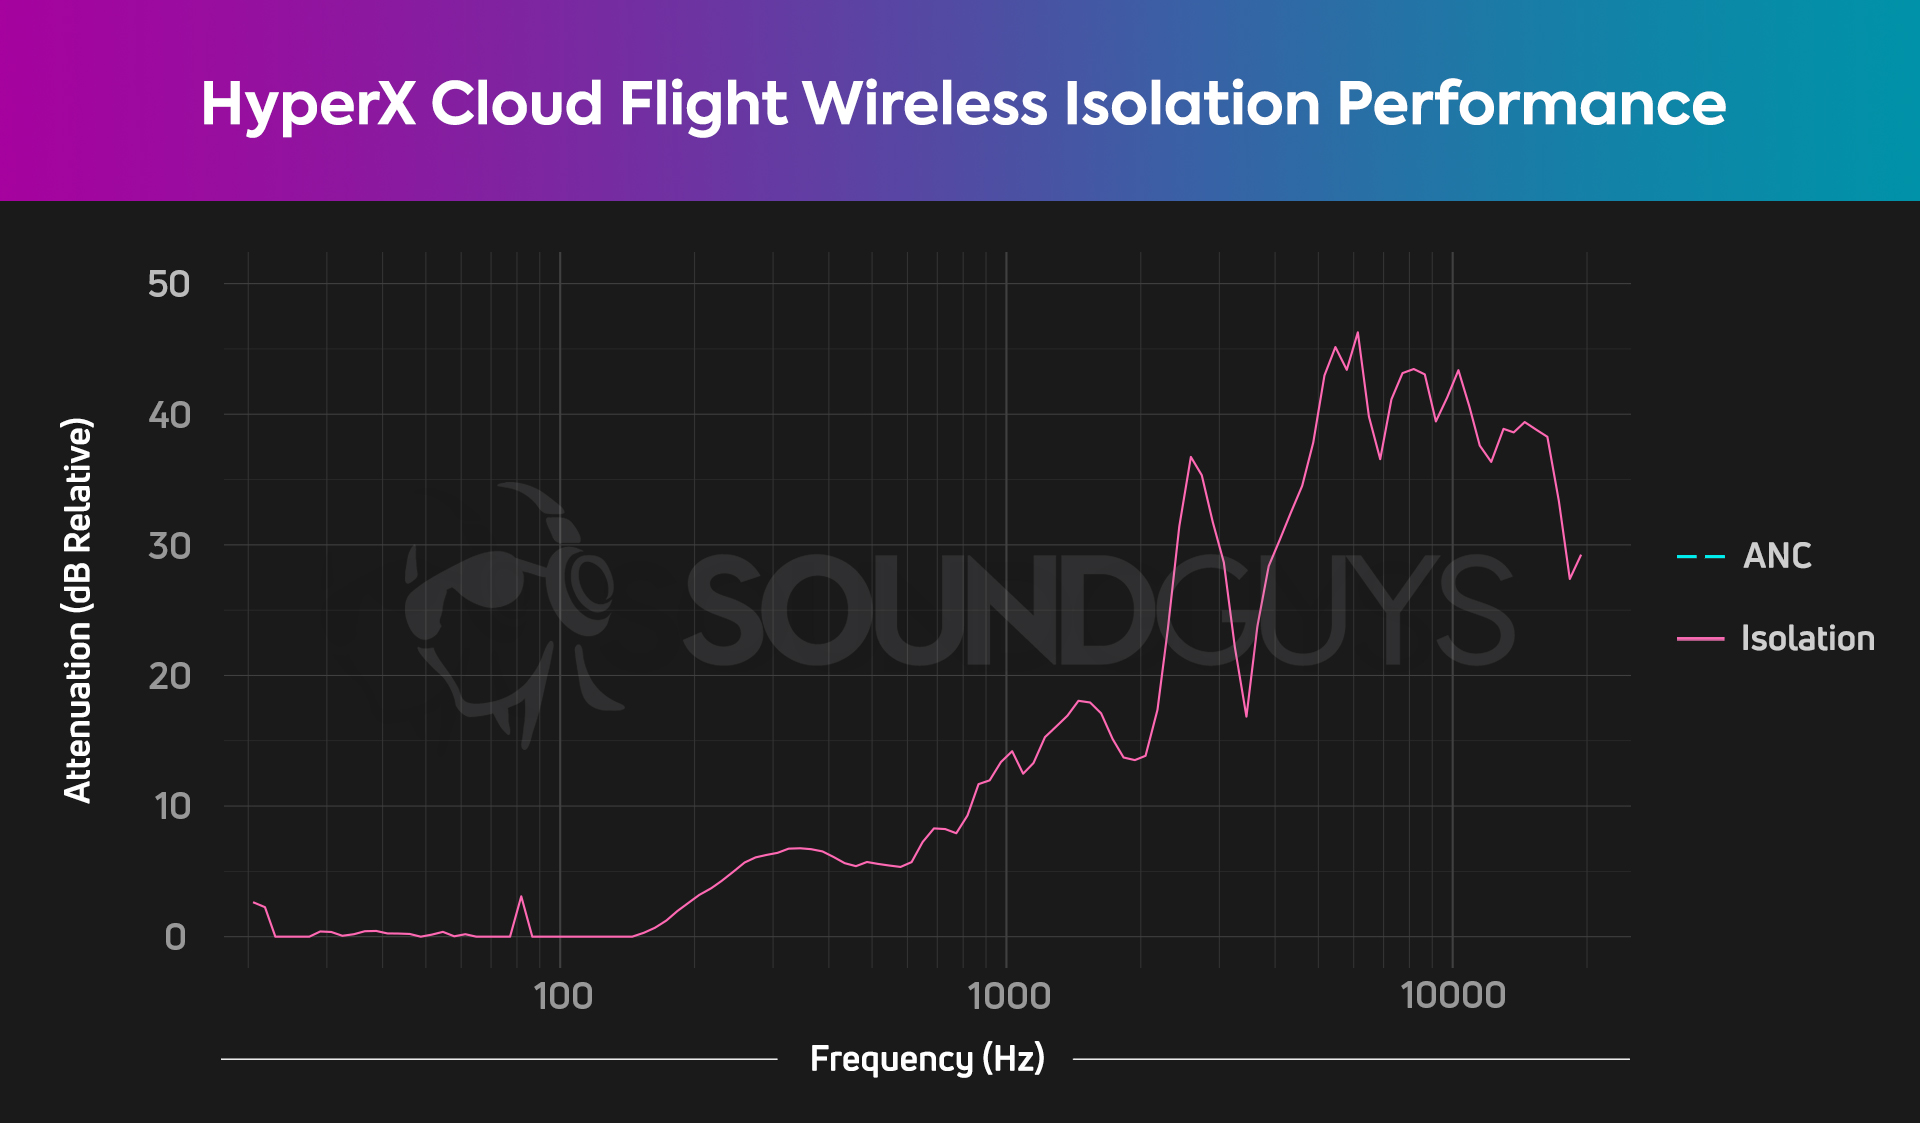 An isolation chart for the HyperX Cloud Flight Wireless